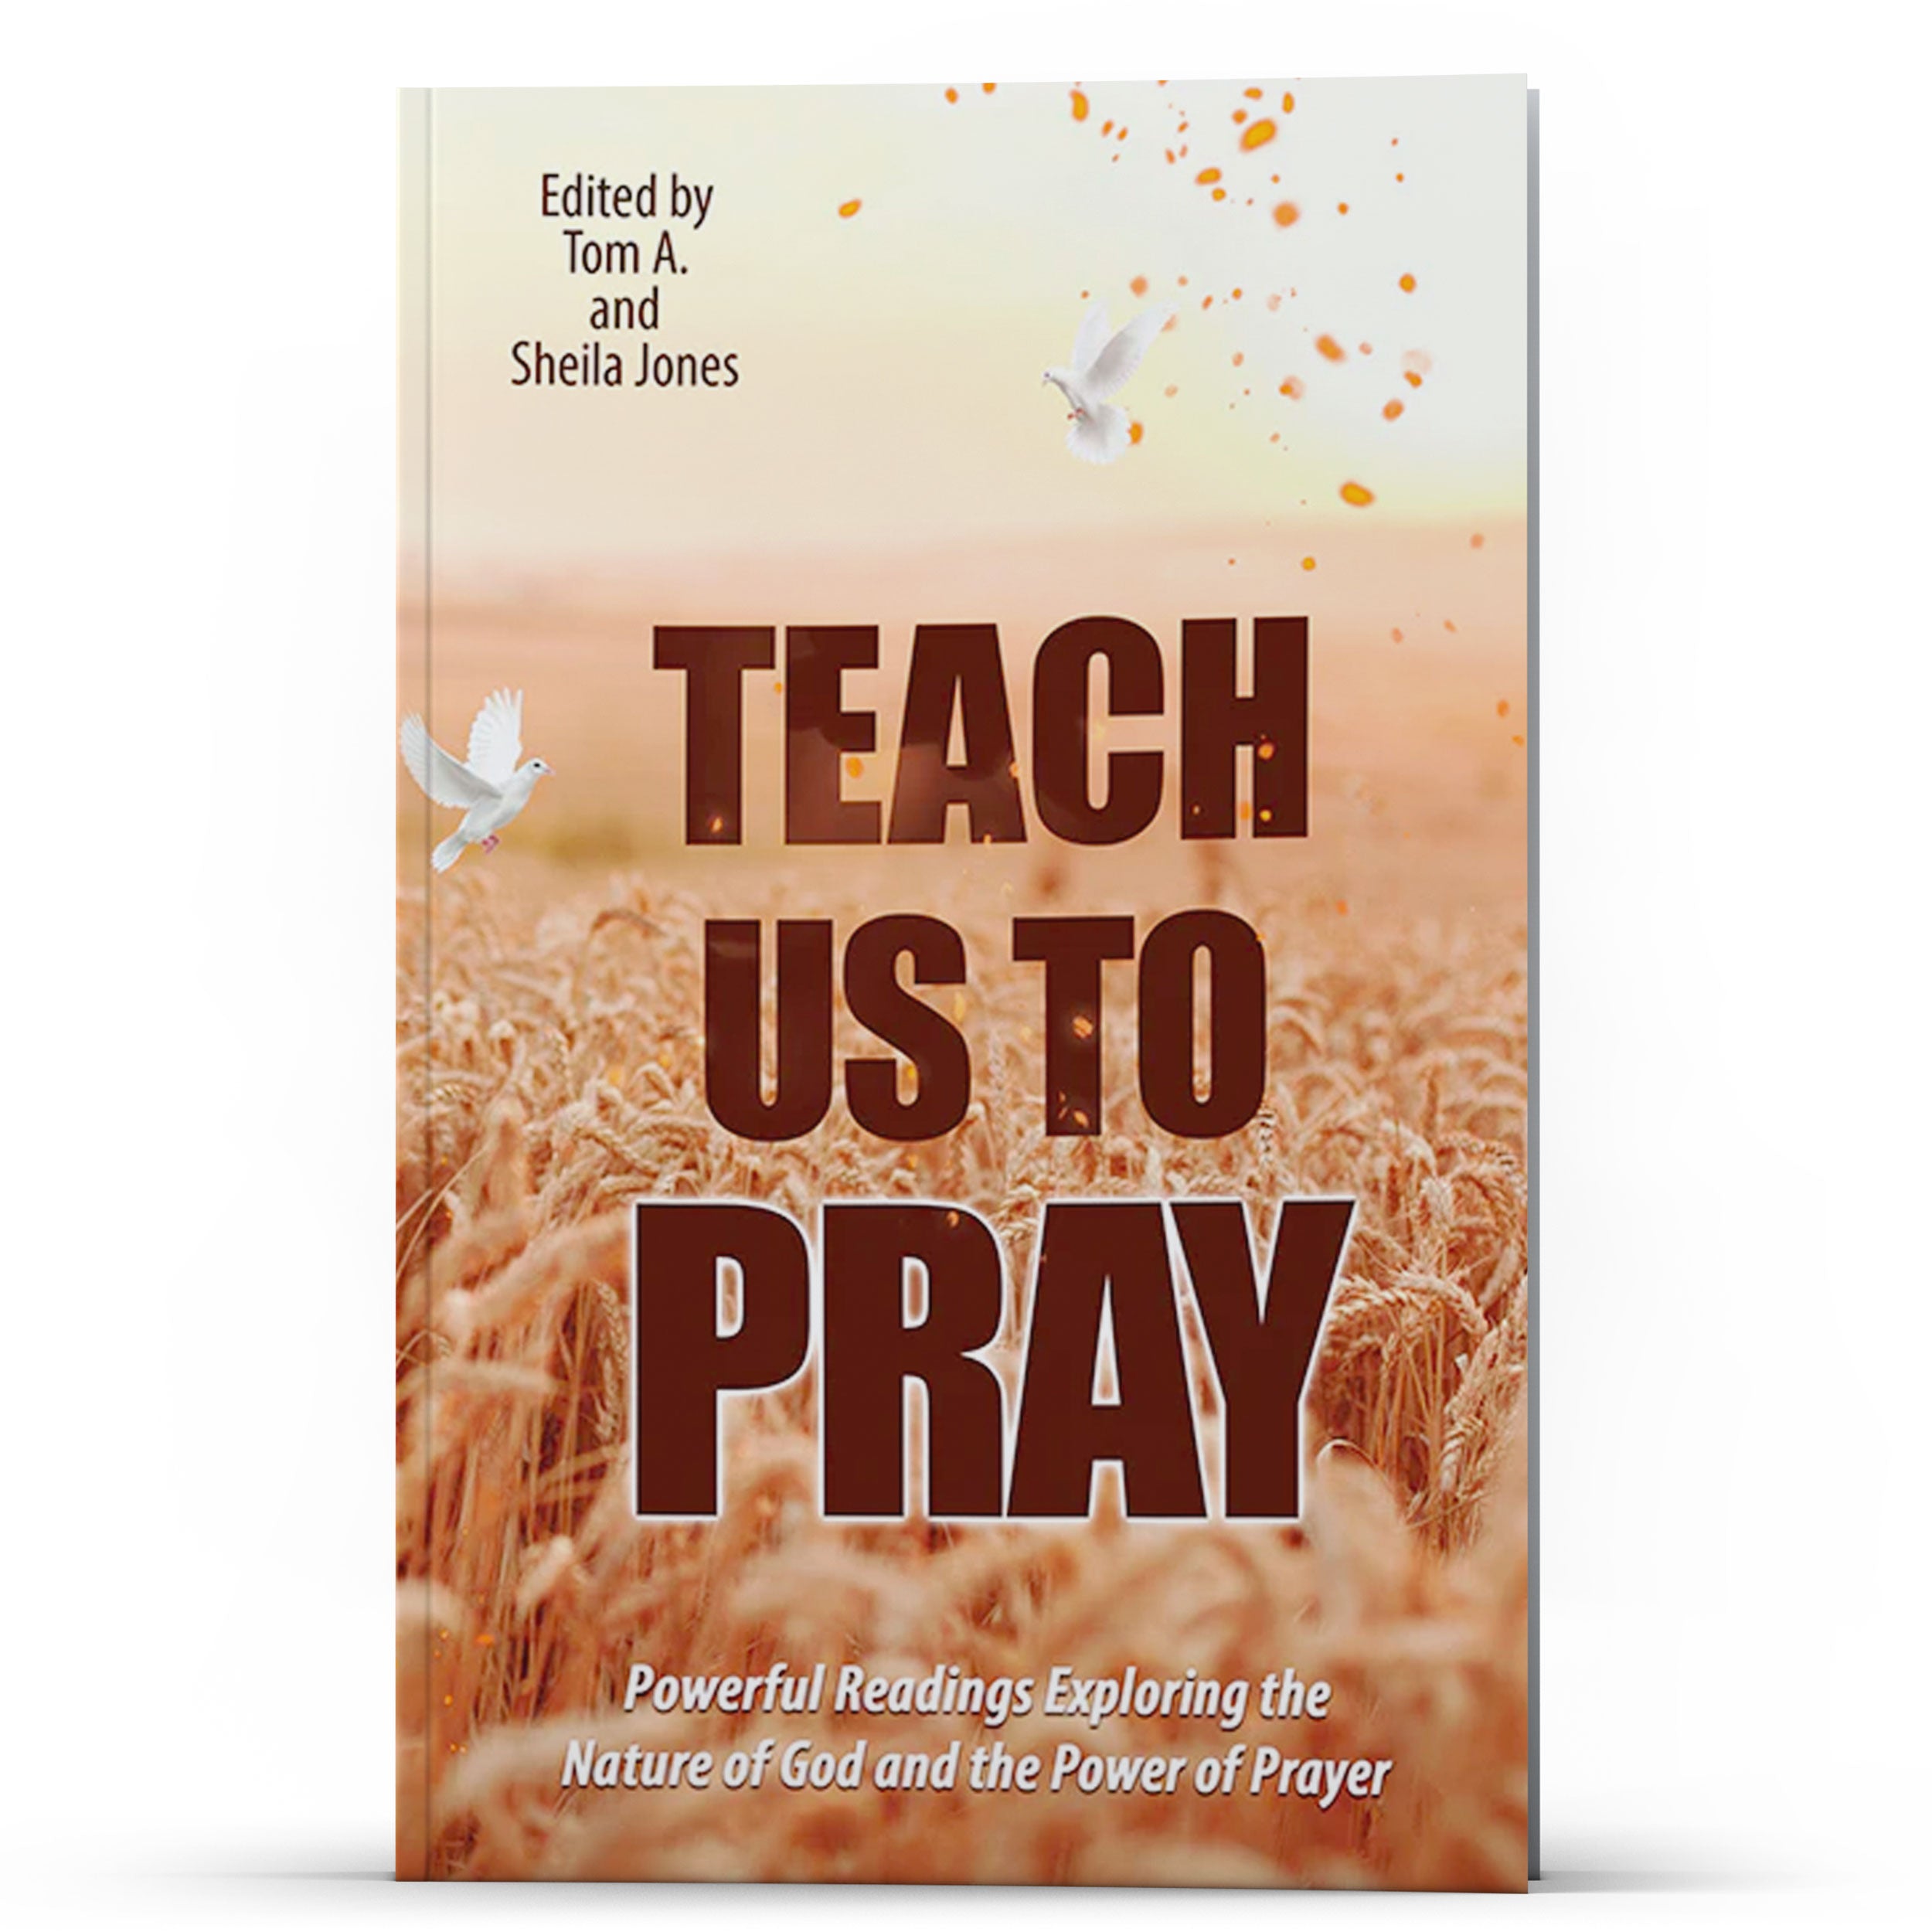 Teach Us To Pray (Daily Power Series) - Illumination Publishers